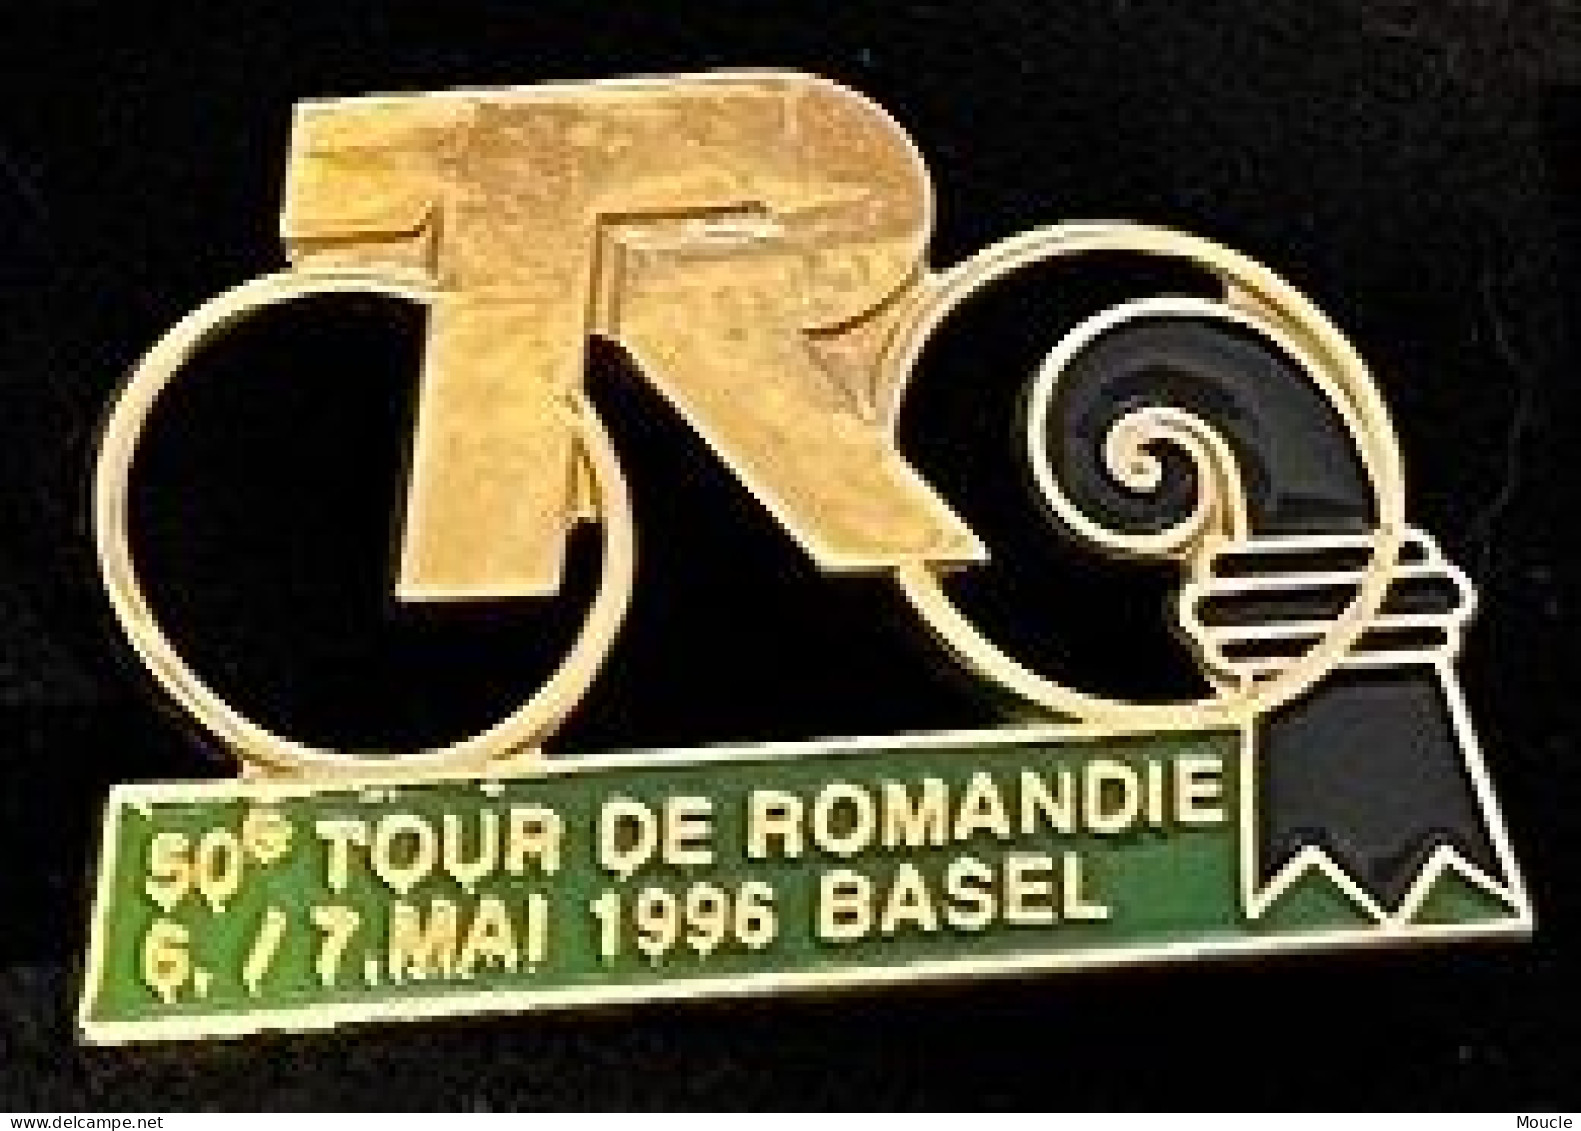 CYCLISME - VELO - BIKE - CYCLISTE - CYCLES - 50ème TOUR DE ROMANDIE 6-7 MAI 1996 - BALE - BASEL - SUISSE -SCHWEIZ-(33) - Cycling